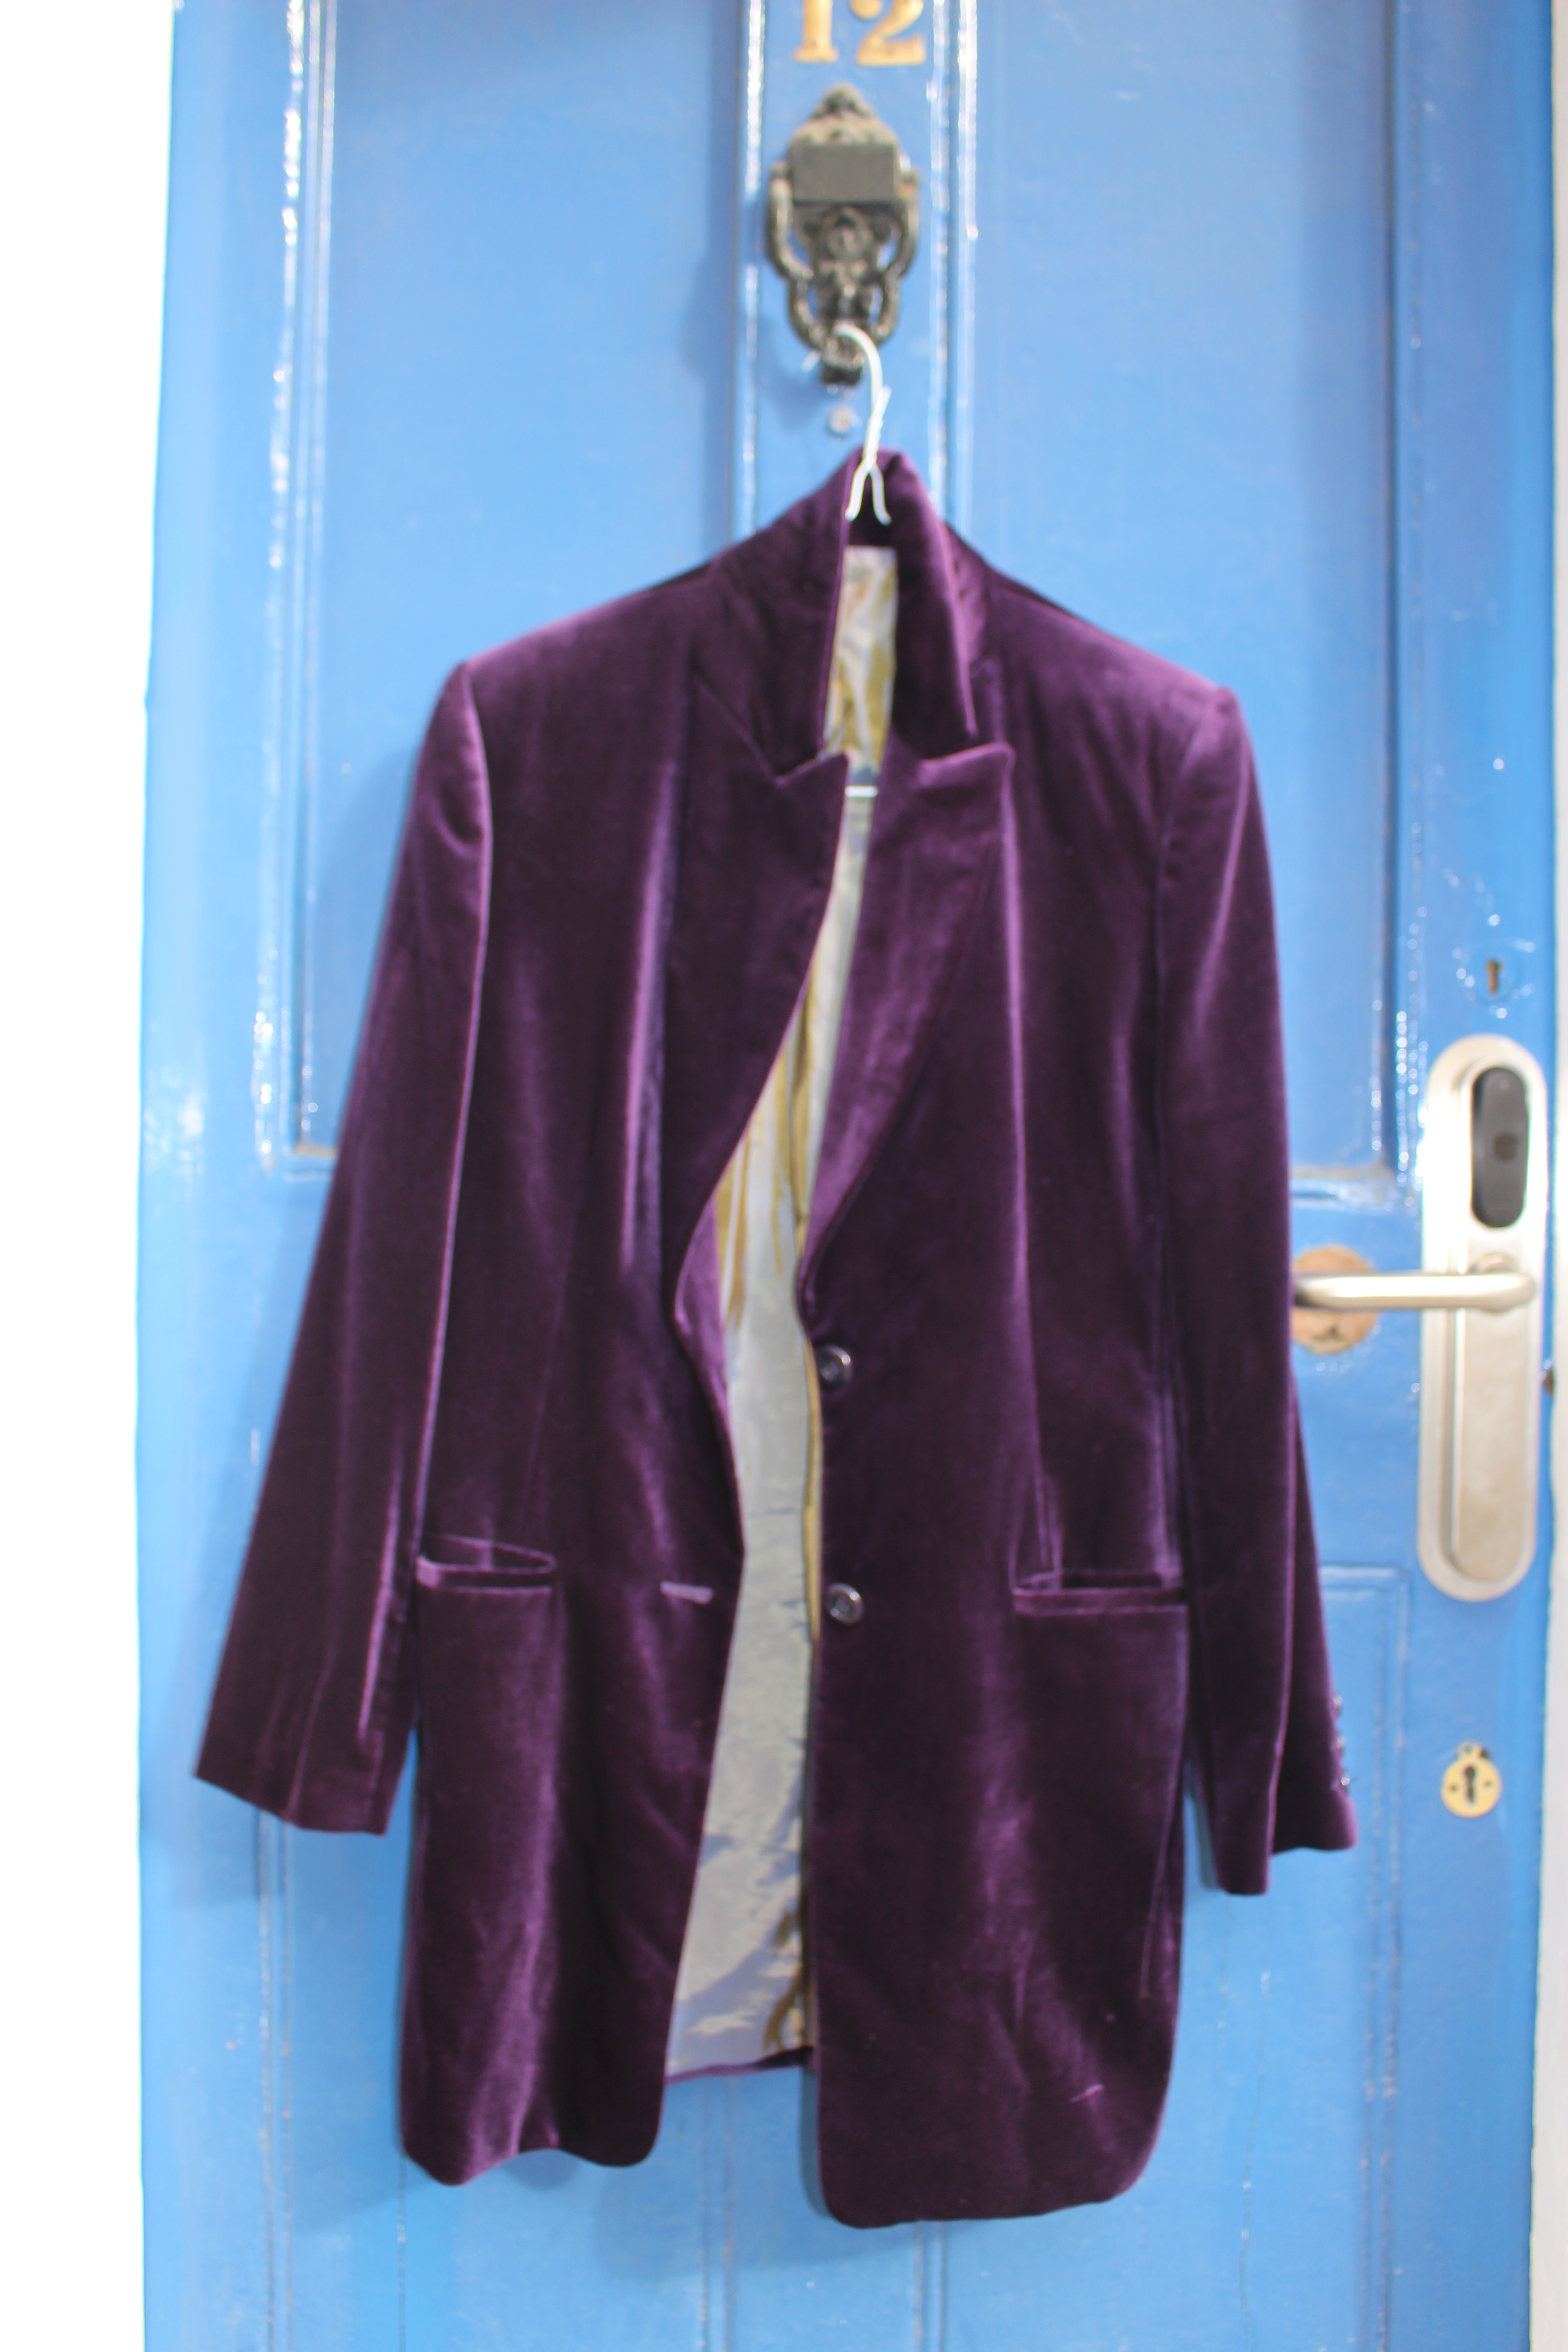 Purple velvet jacket